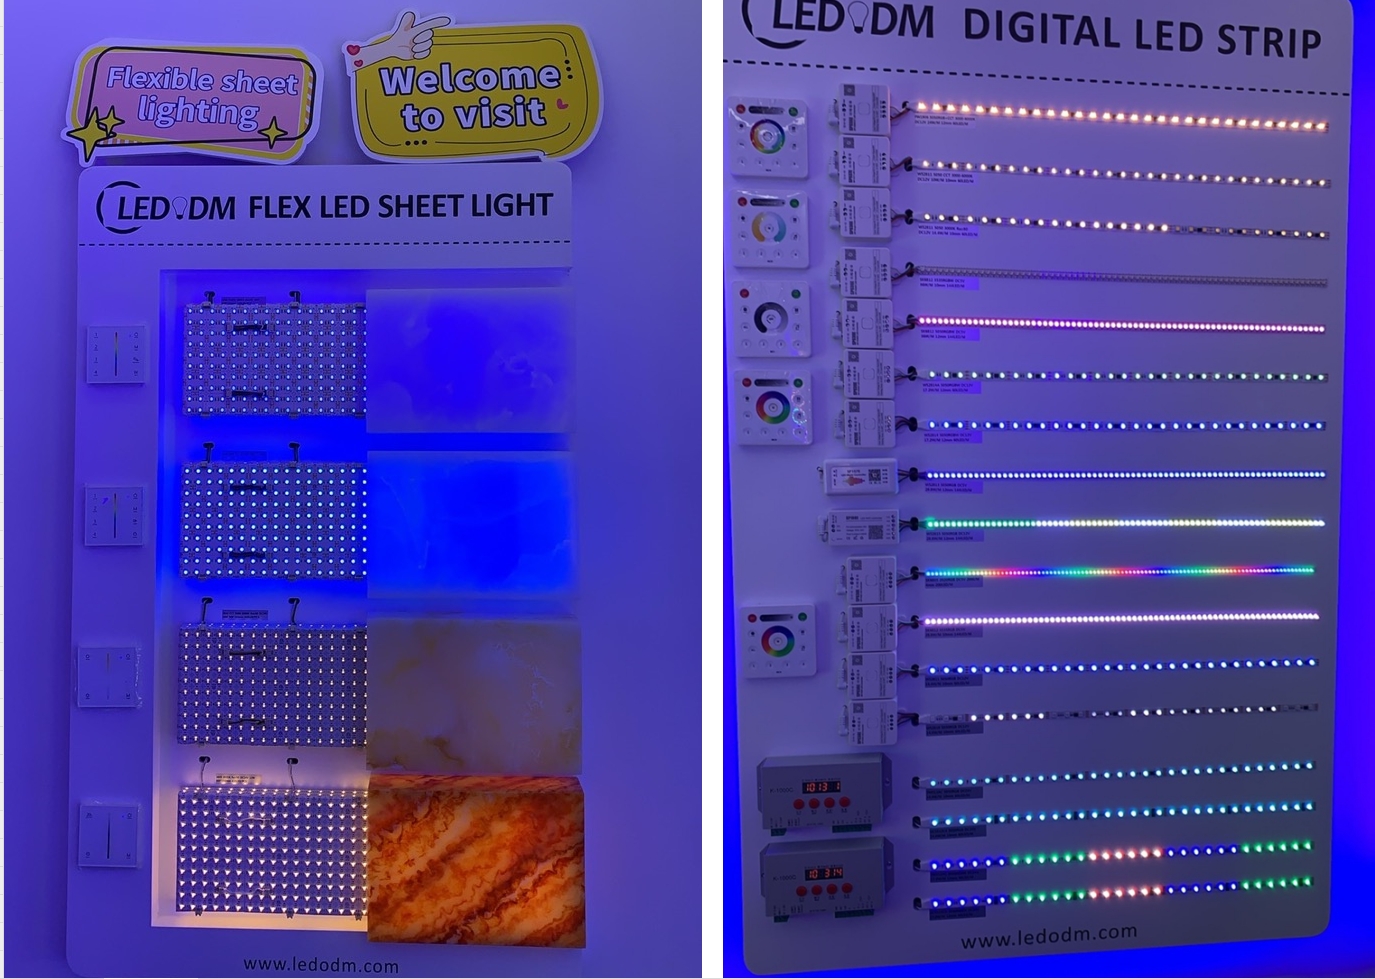 Flex Led sheet light and Digital led strip